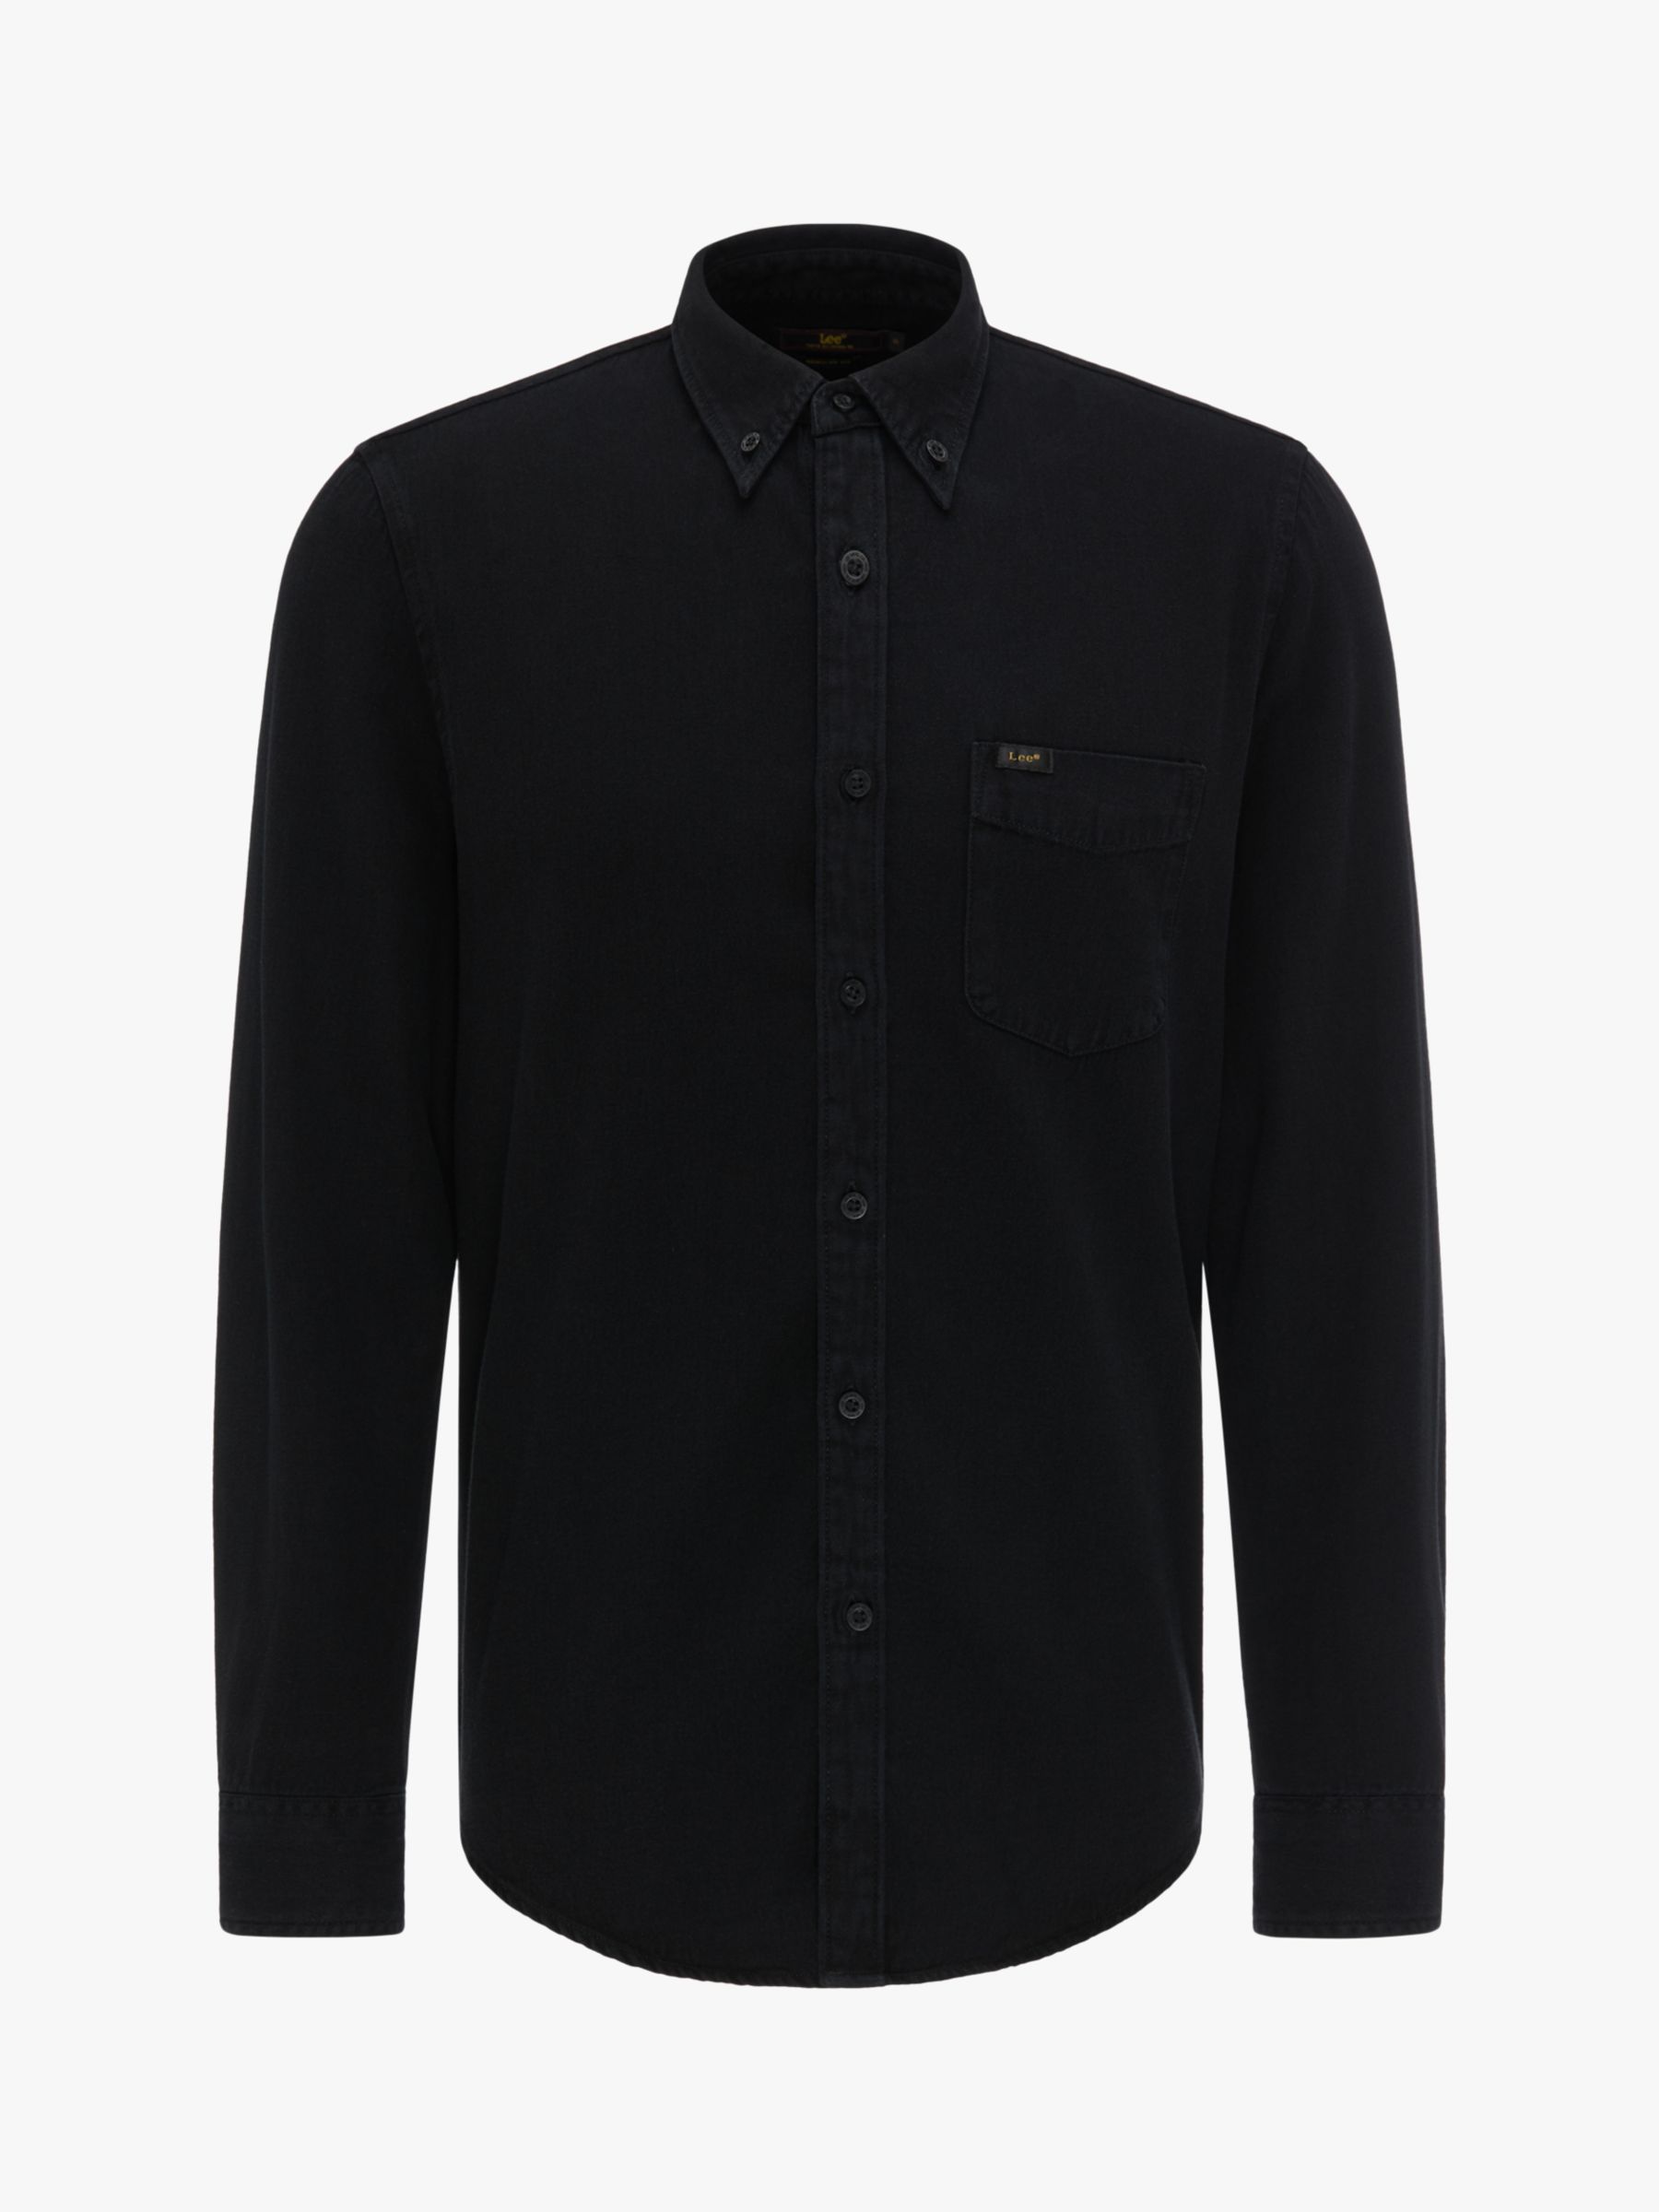 Lee Cotton Regular Fit Shirt, Black, S